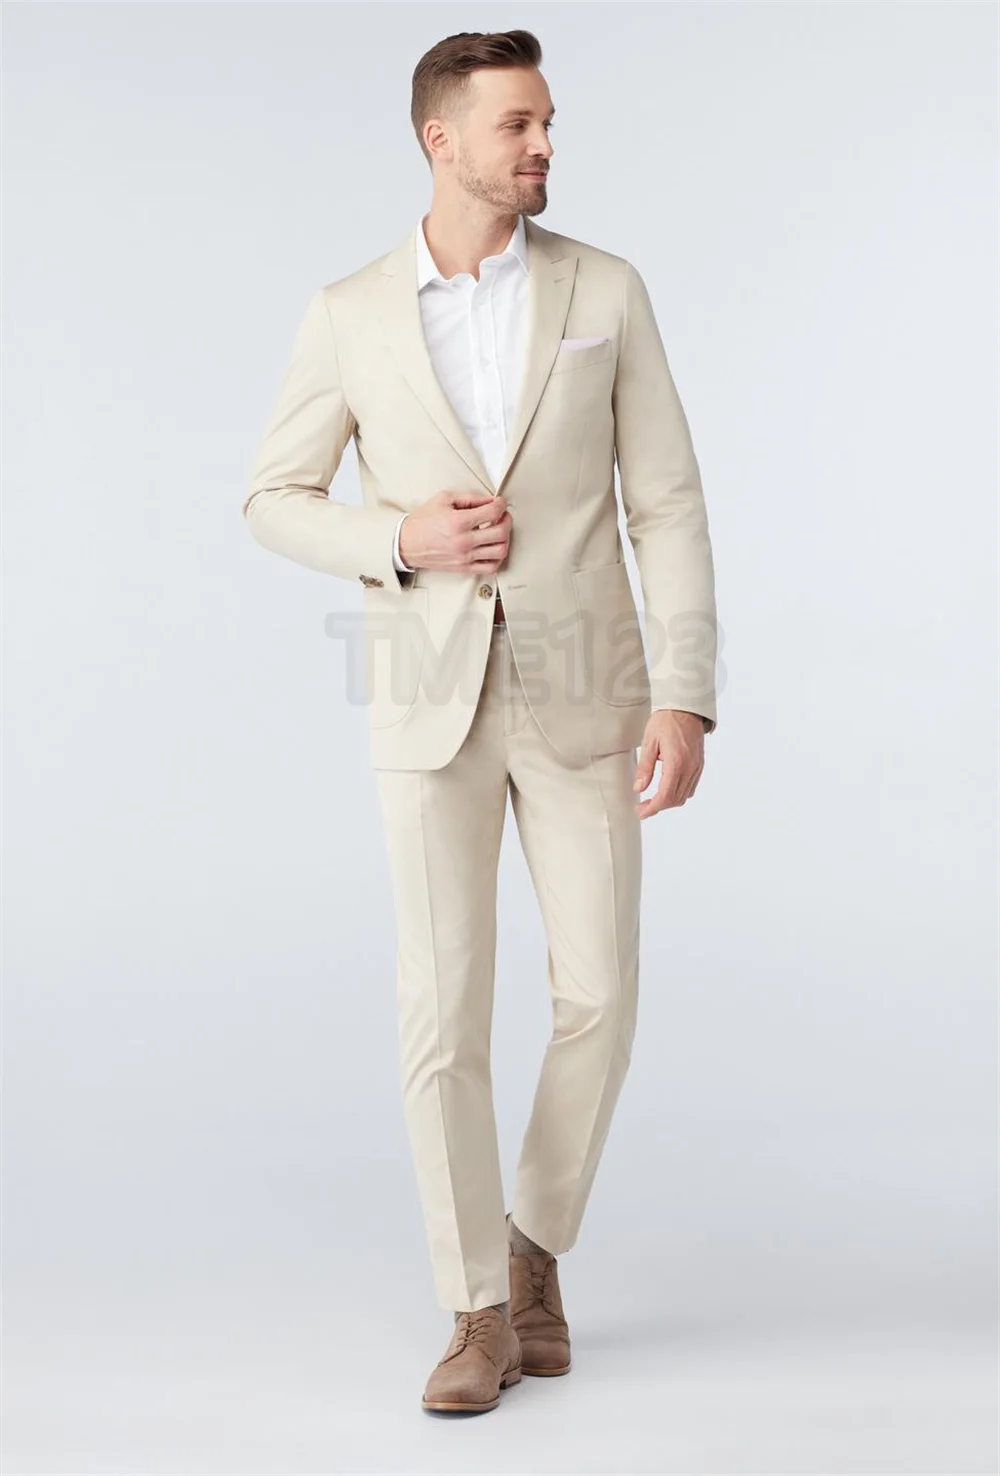 Classic Slim Fit Men Suits Groom Wedding Party Tuxedo 2 Piece Jacket Pants Set Formal Professional Business Blazer Costume Homme